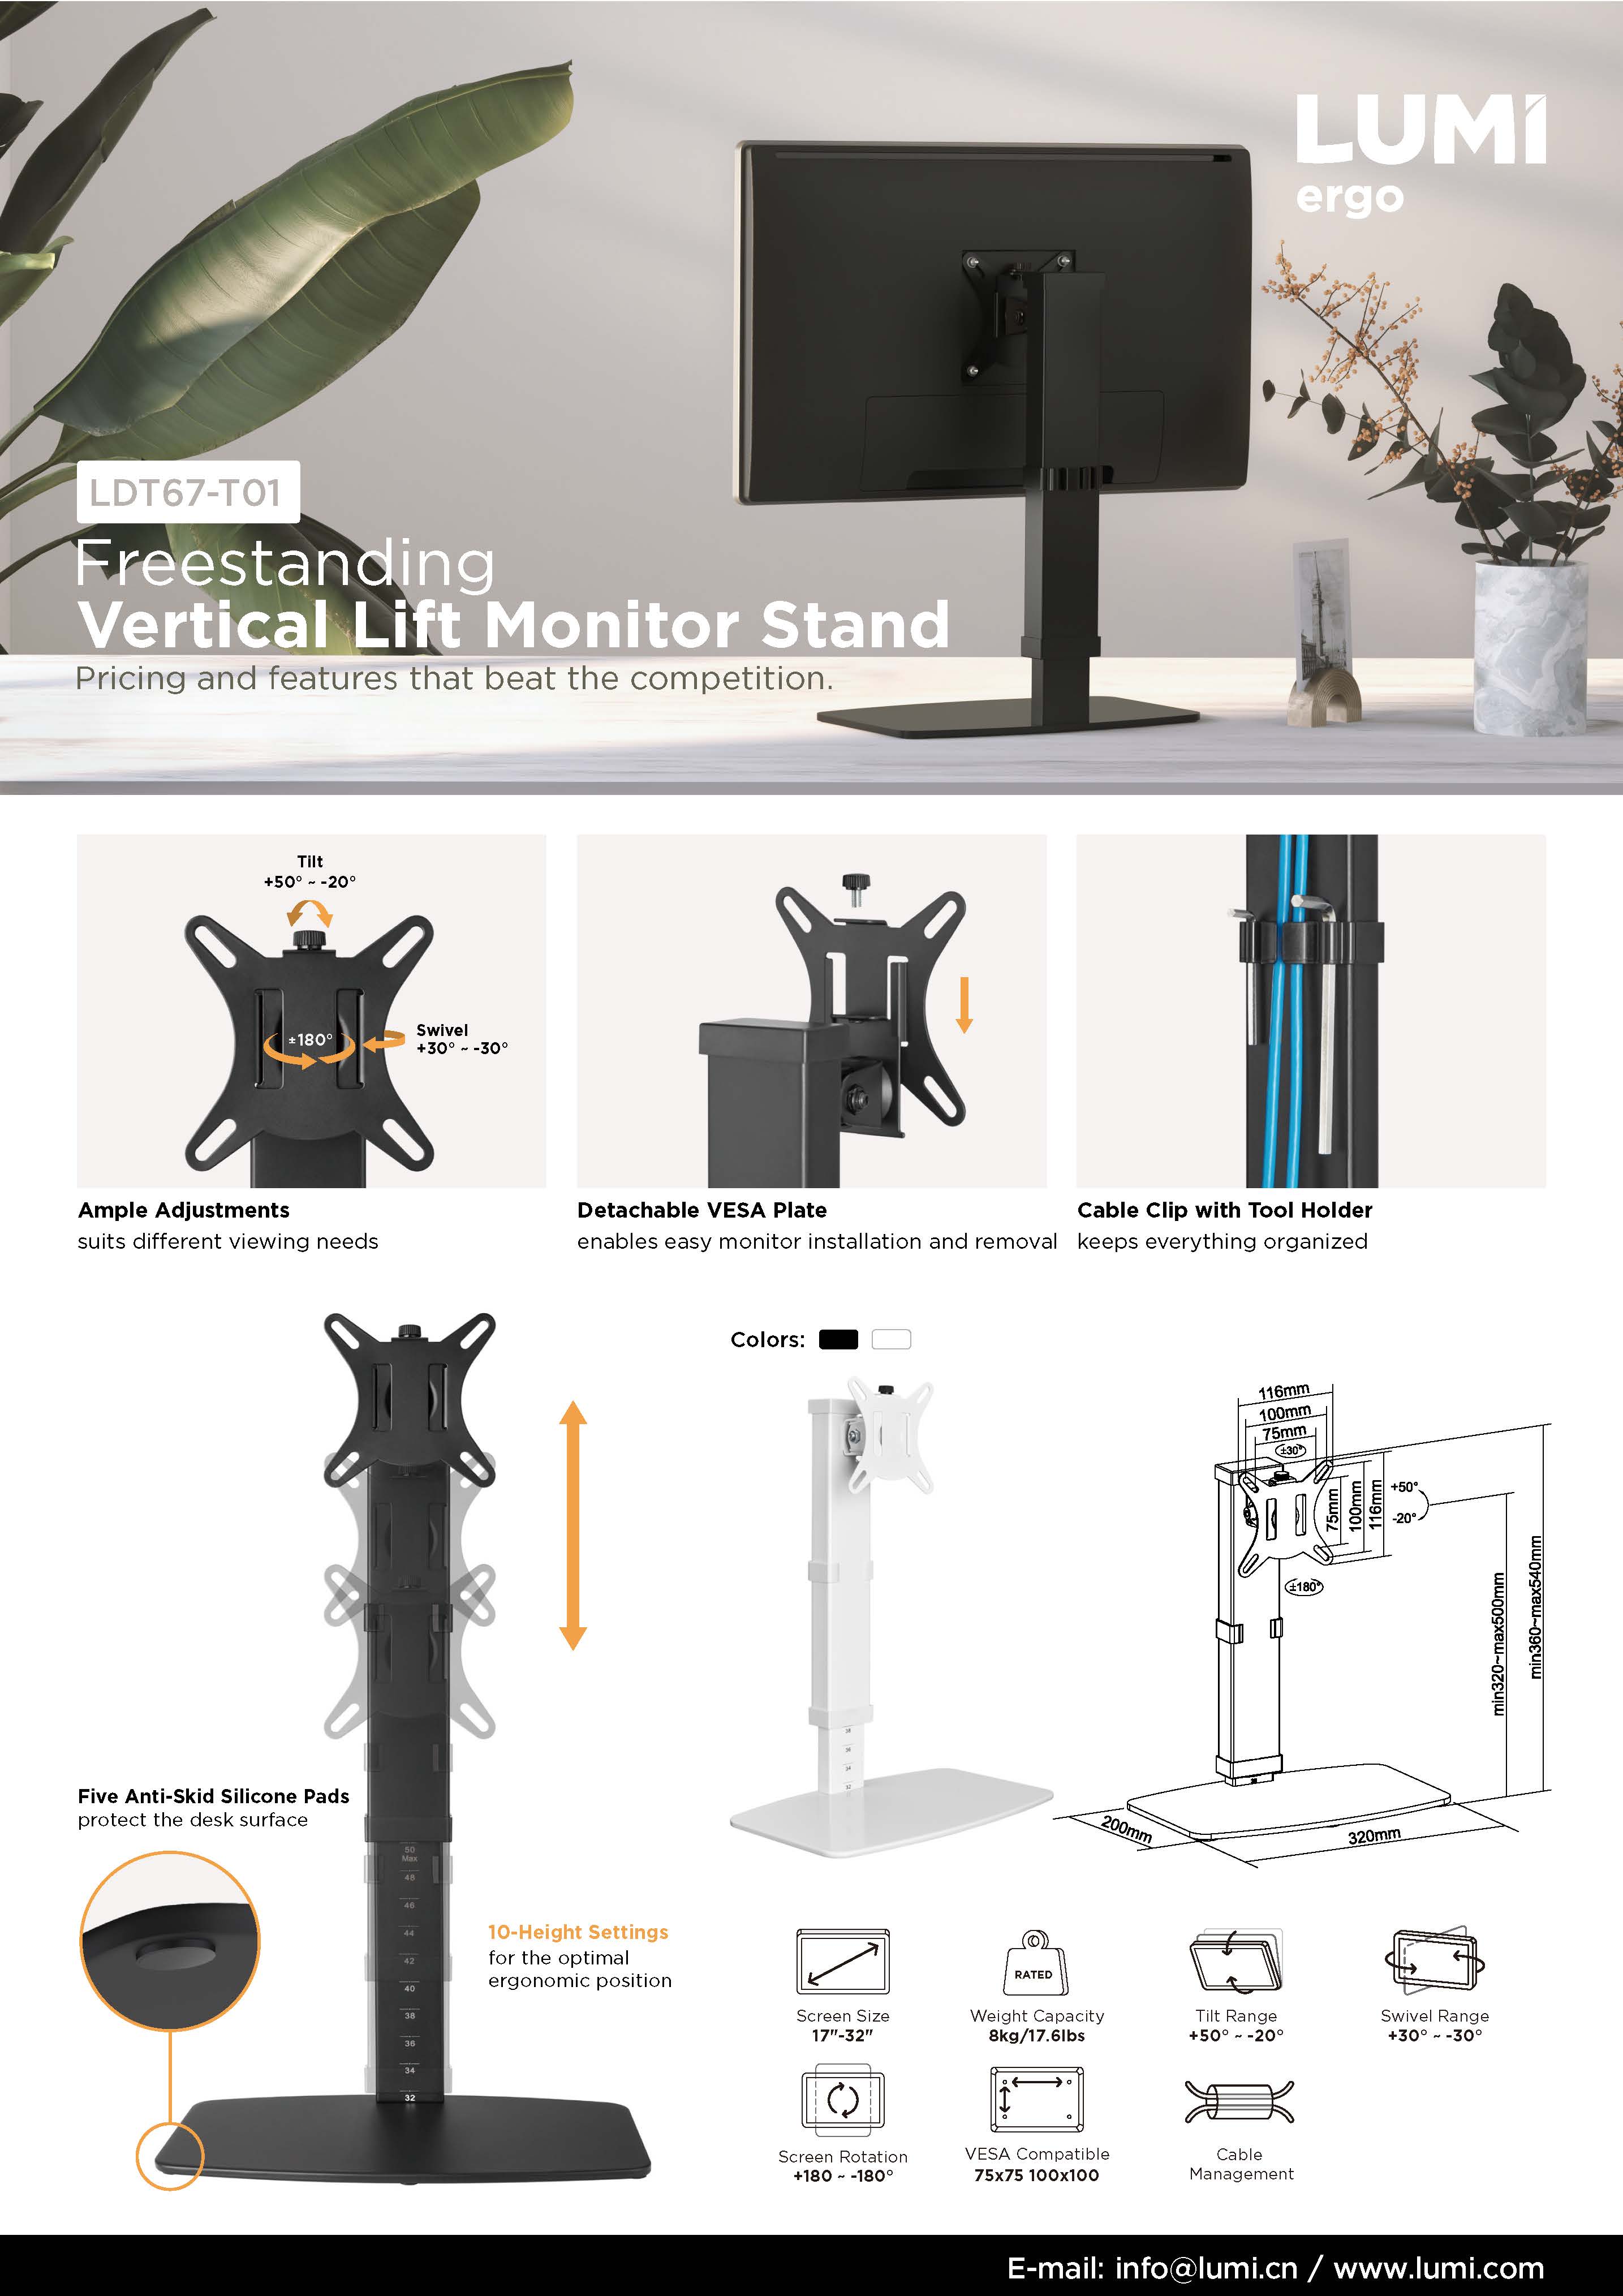 LDT67-T01 Freestanding Vertical Lift Monitor Stand